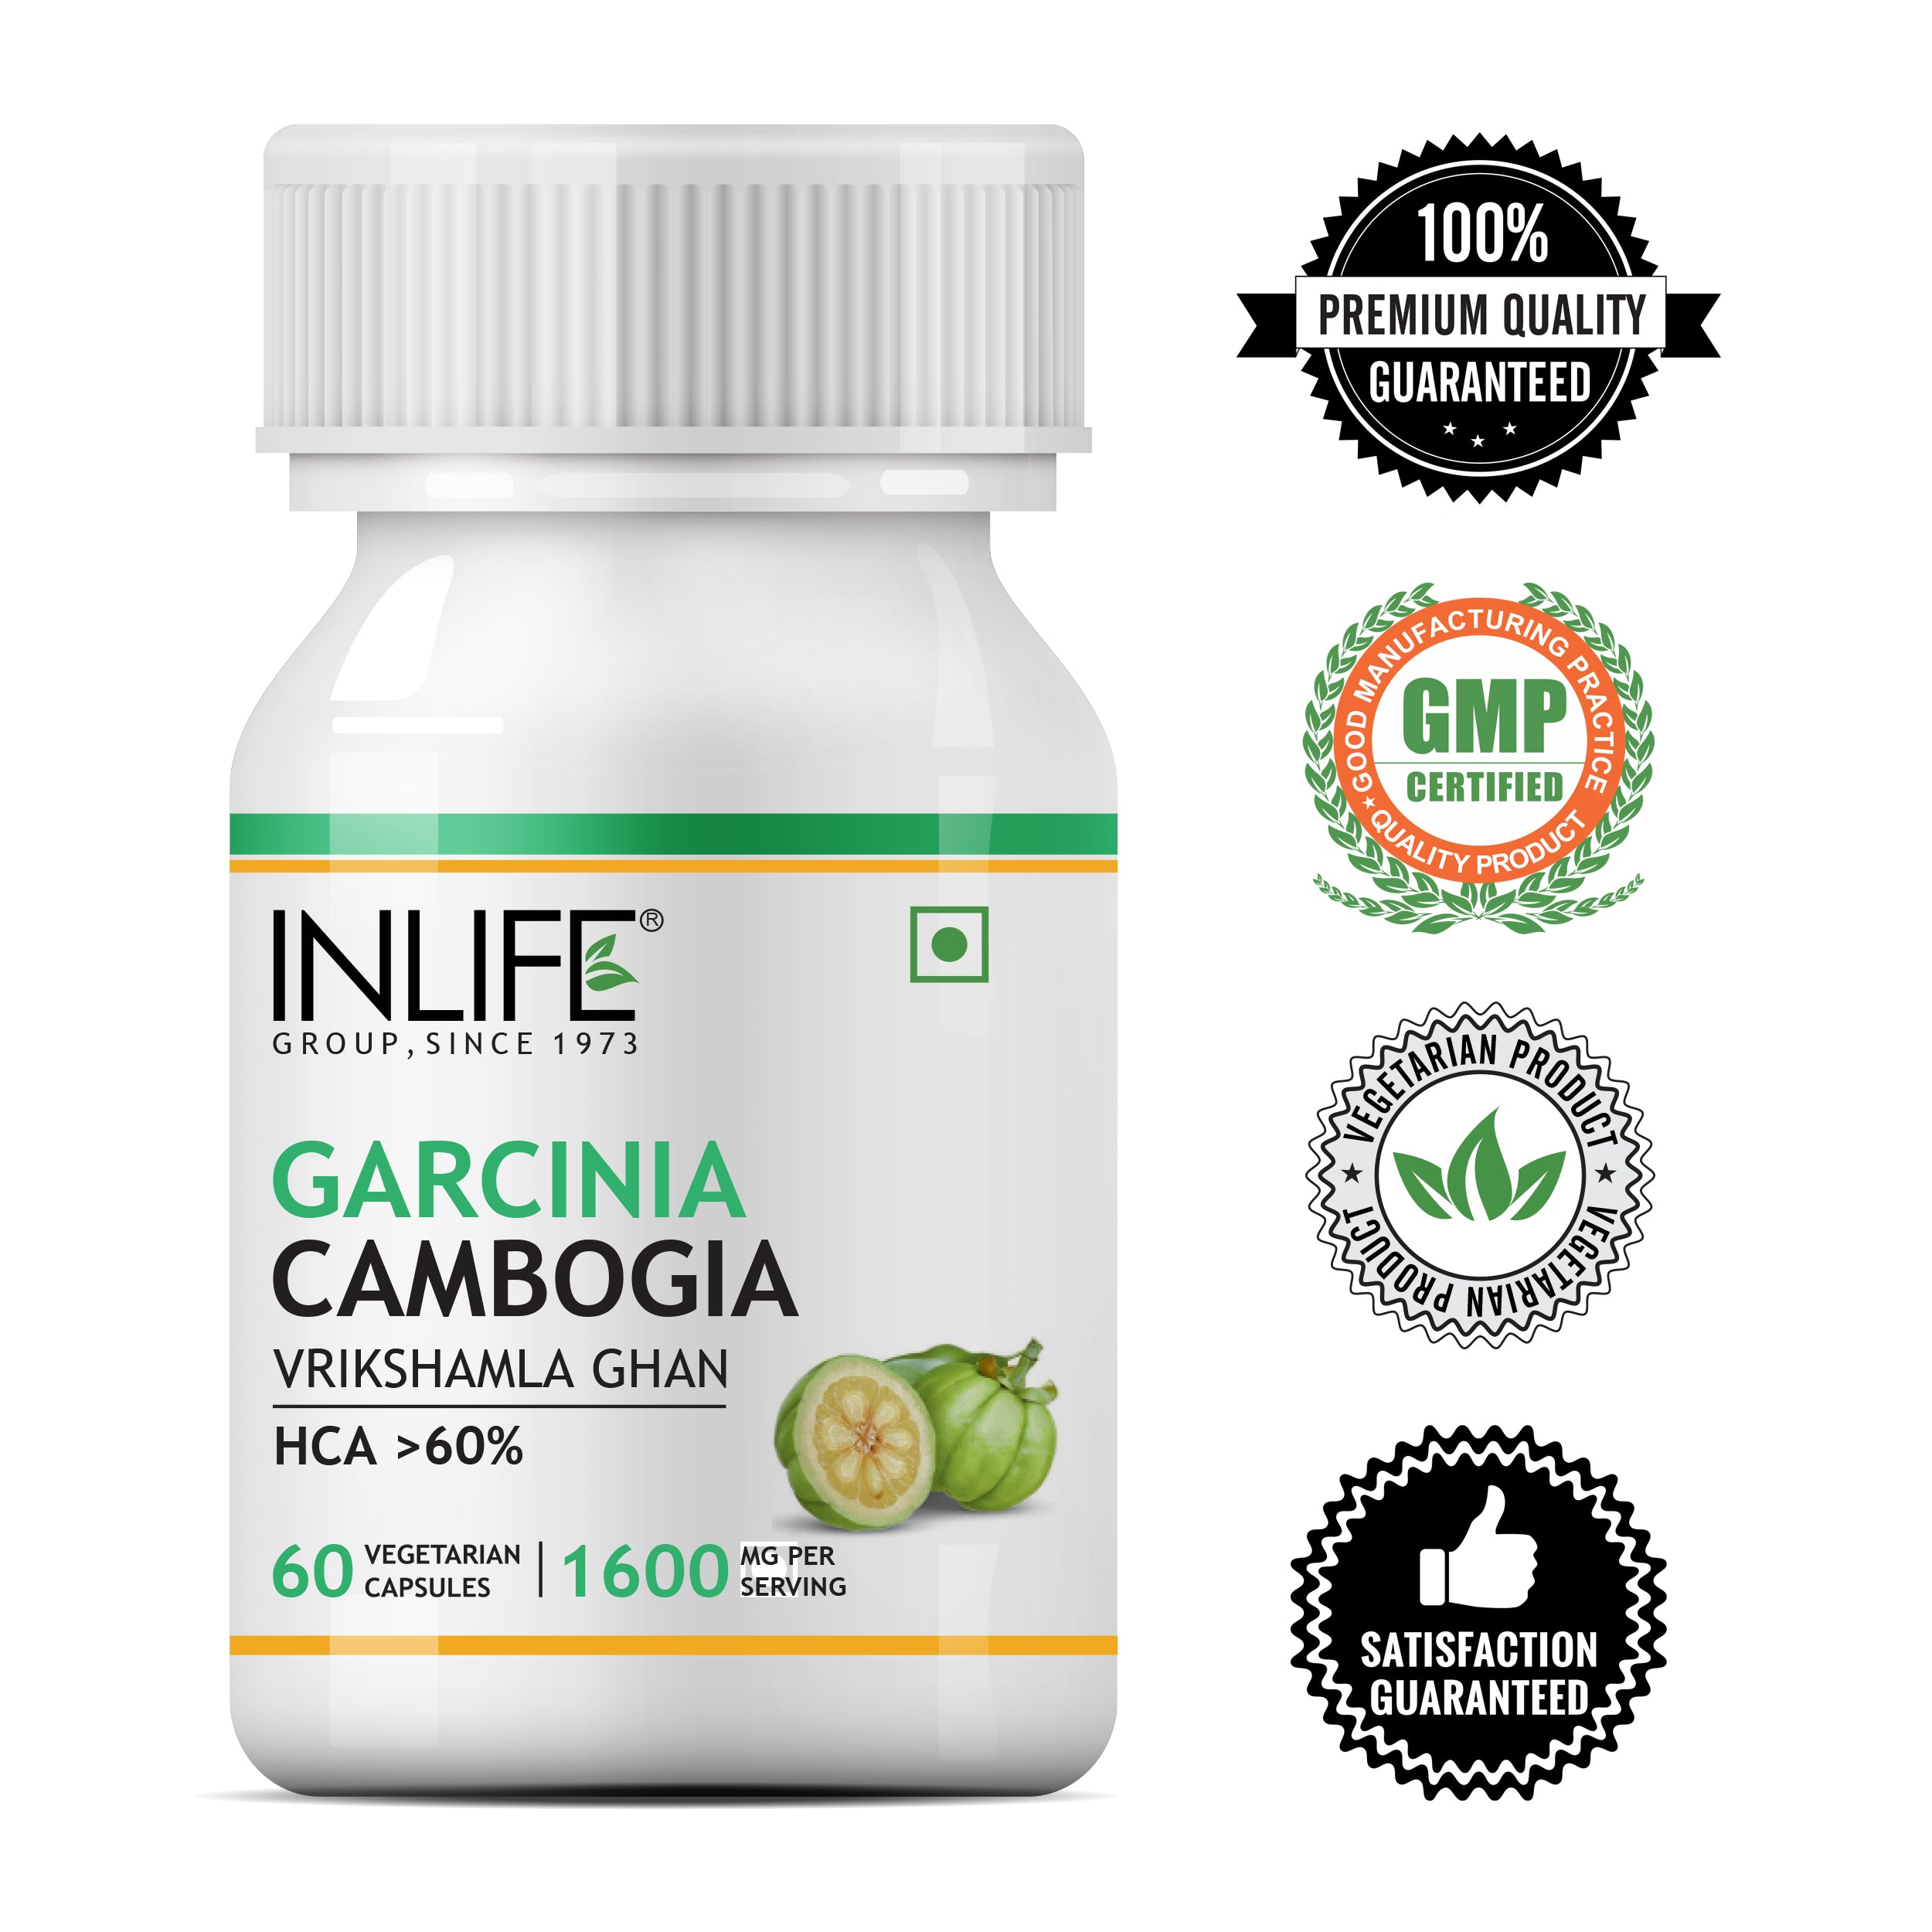 INLIFE Garcinia Cambogia Extract Supplement, 1600 mg per serving - 60 Vegetarian Capsules